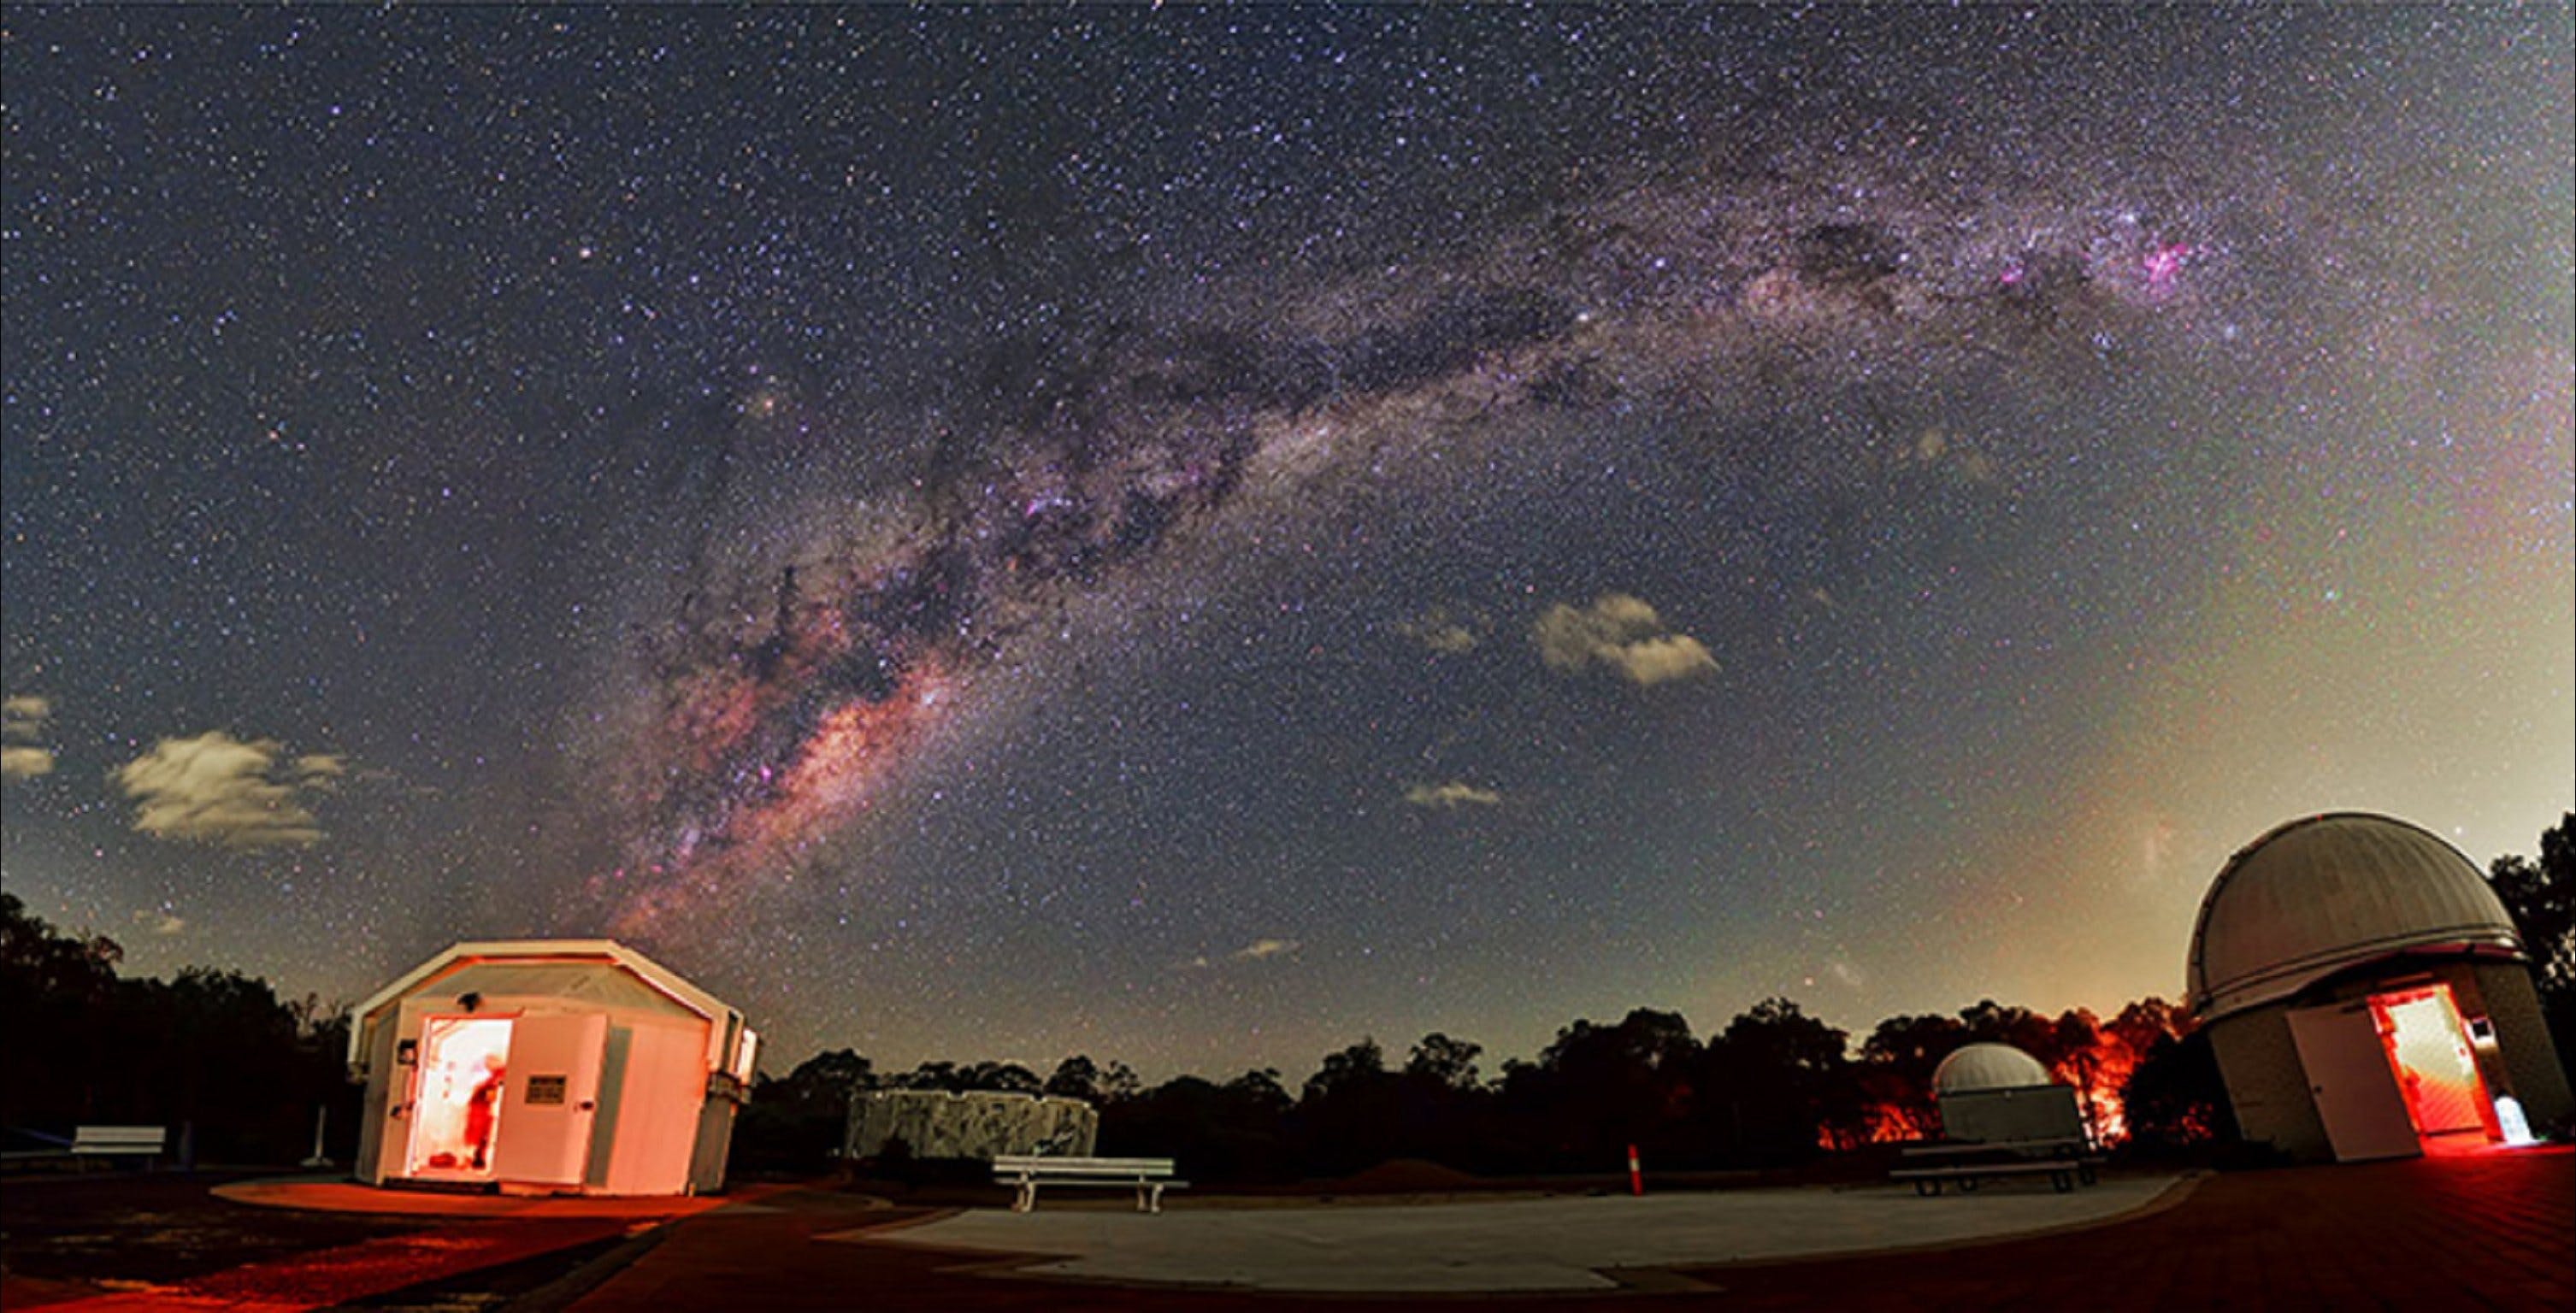 Perth Observatory - Accommodation Perth